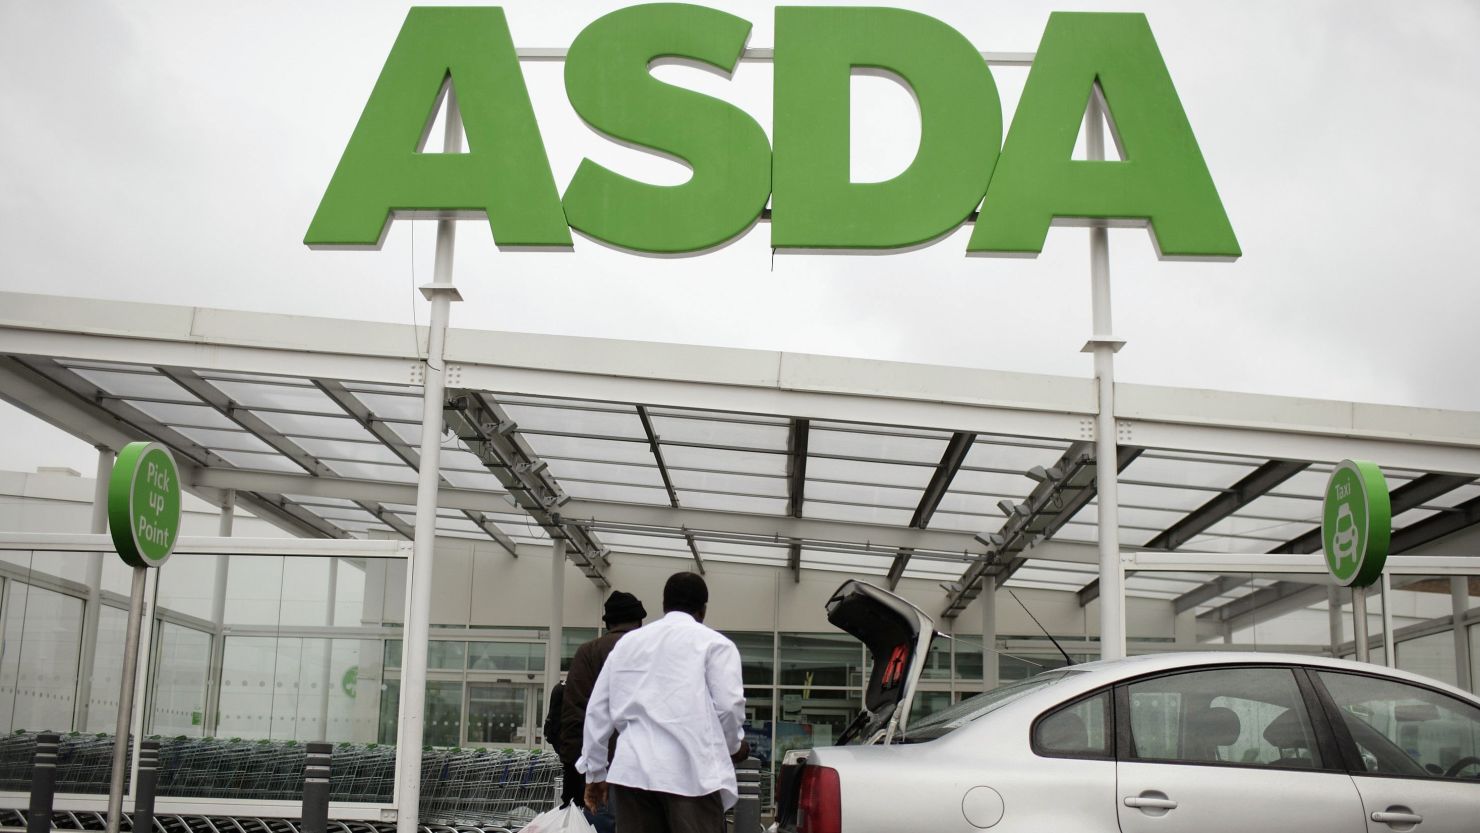 Customers enter an ASDA store in London, England.